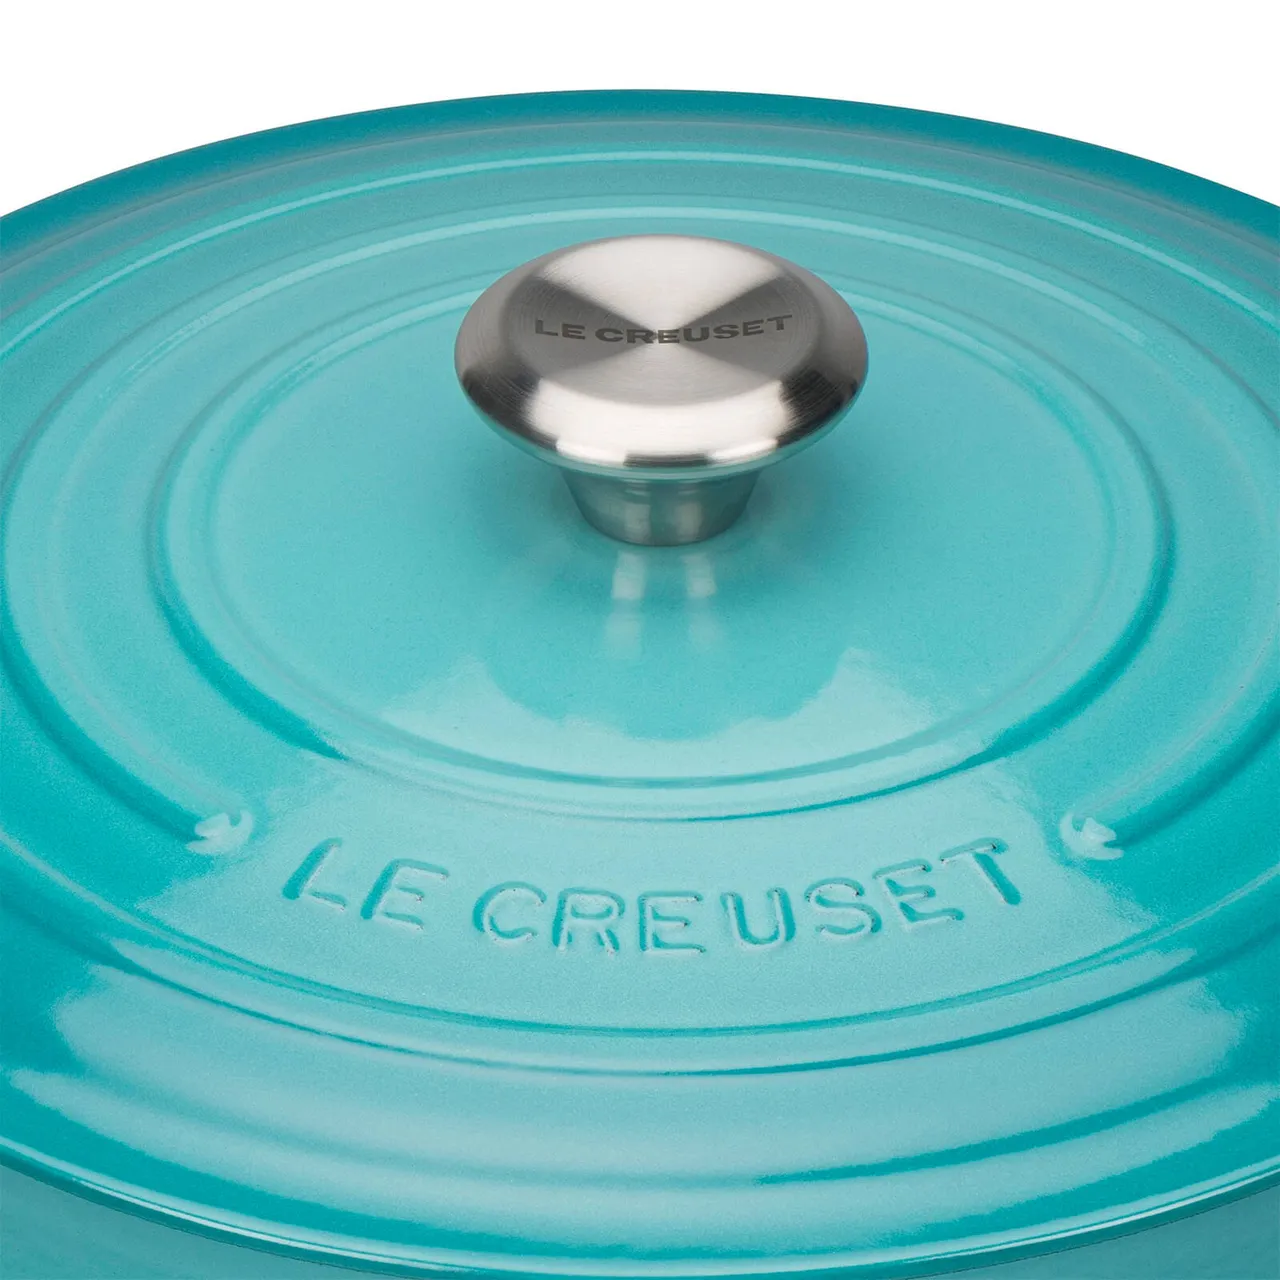 Le Creuset Signature Cast Iron Round Casserole Dish - 20cm - Teal